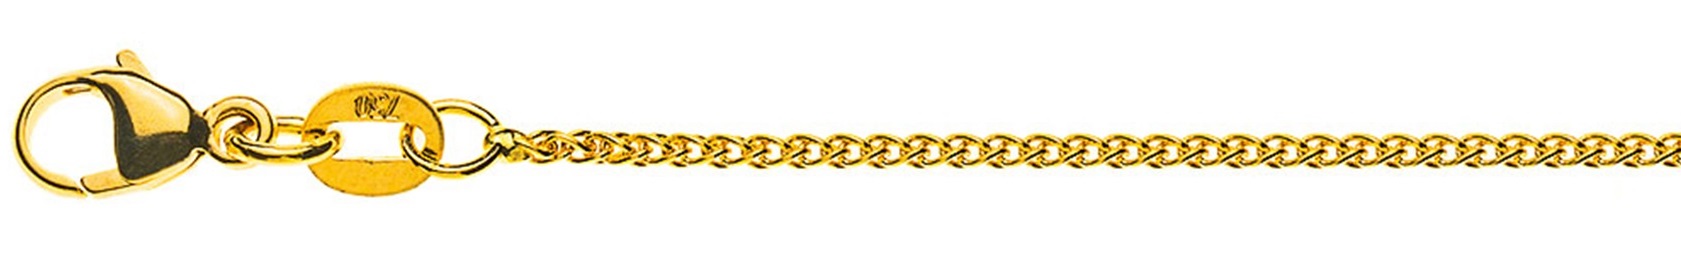 AURONOS Prestige Necklace yellow gold 18K cable chain 40cm 1.2mm